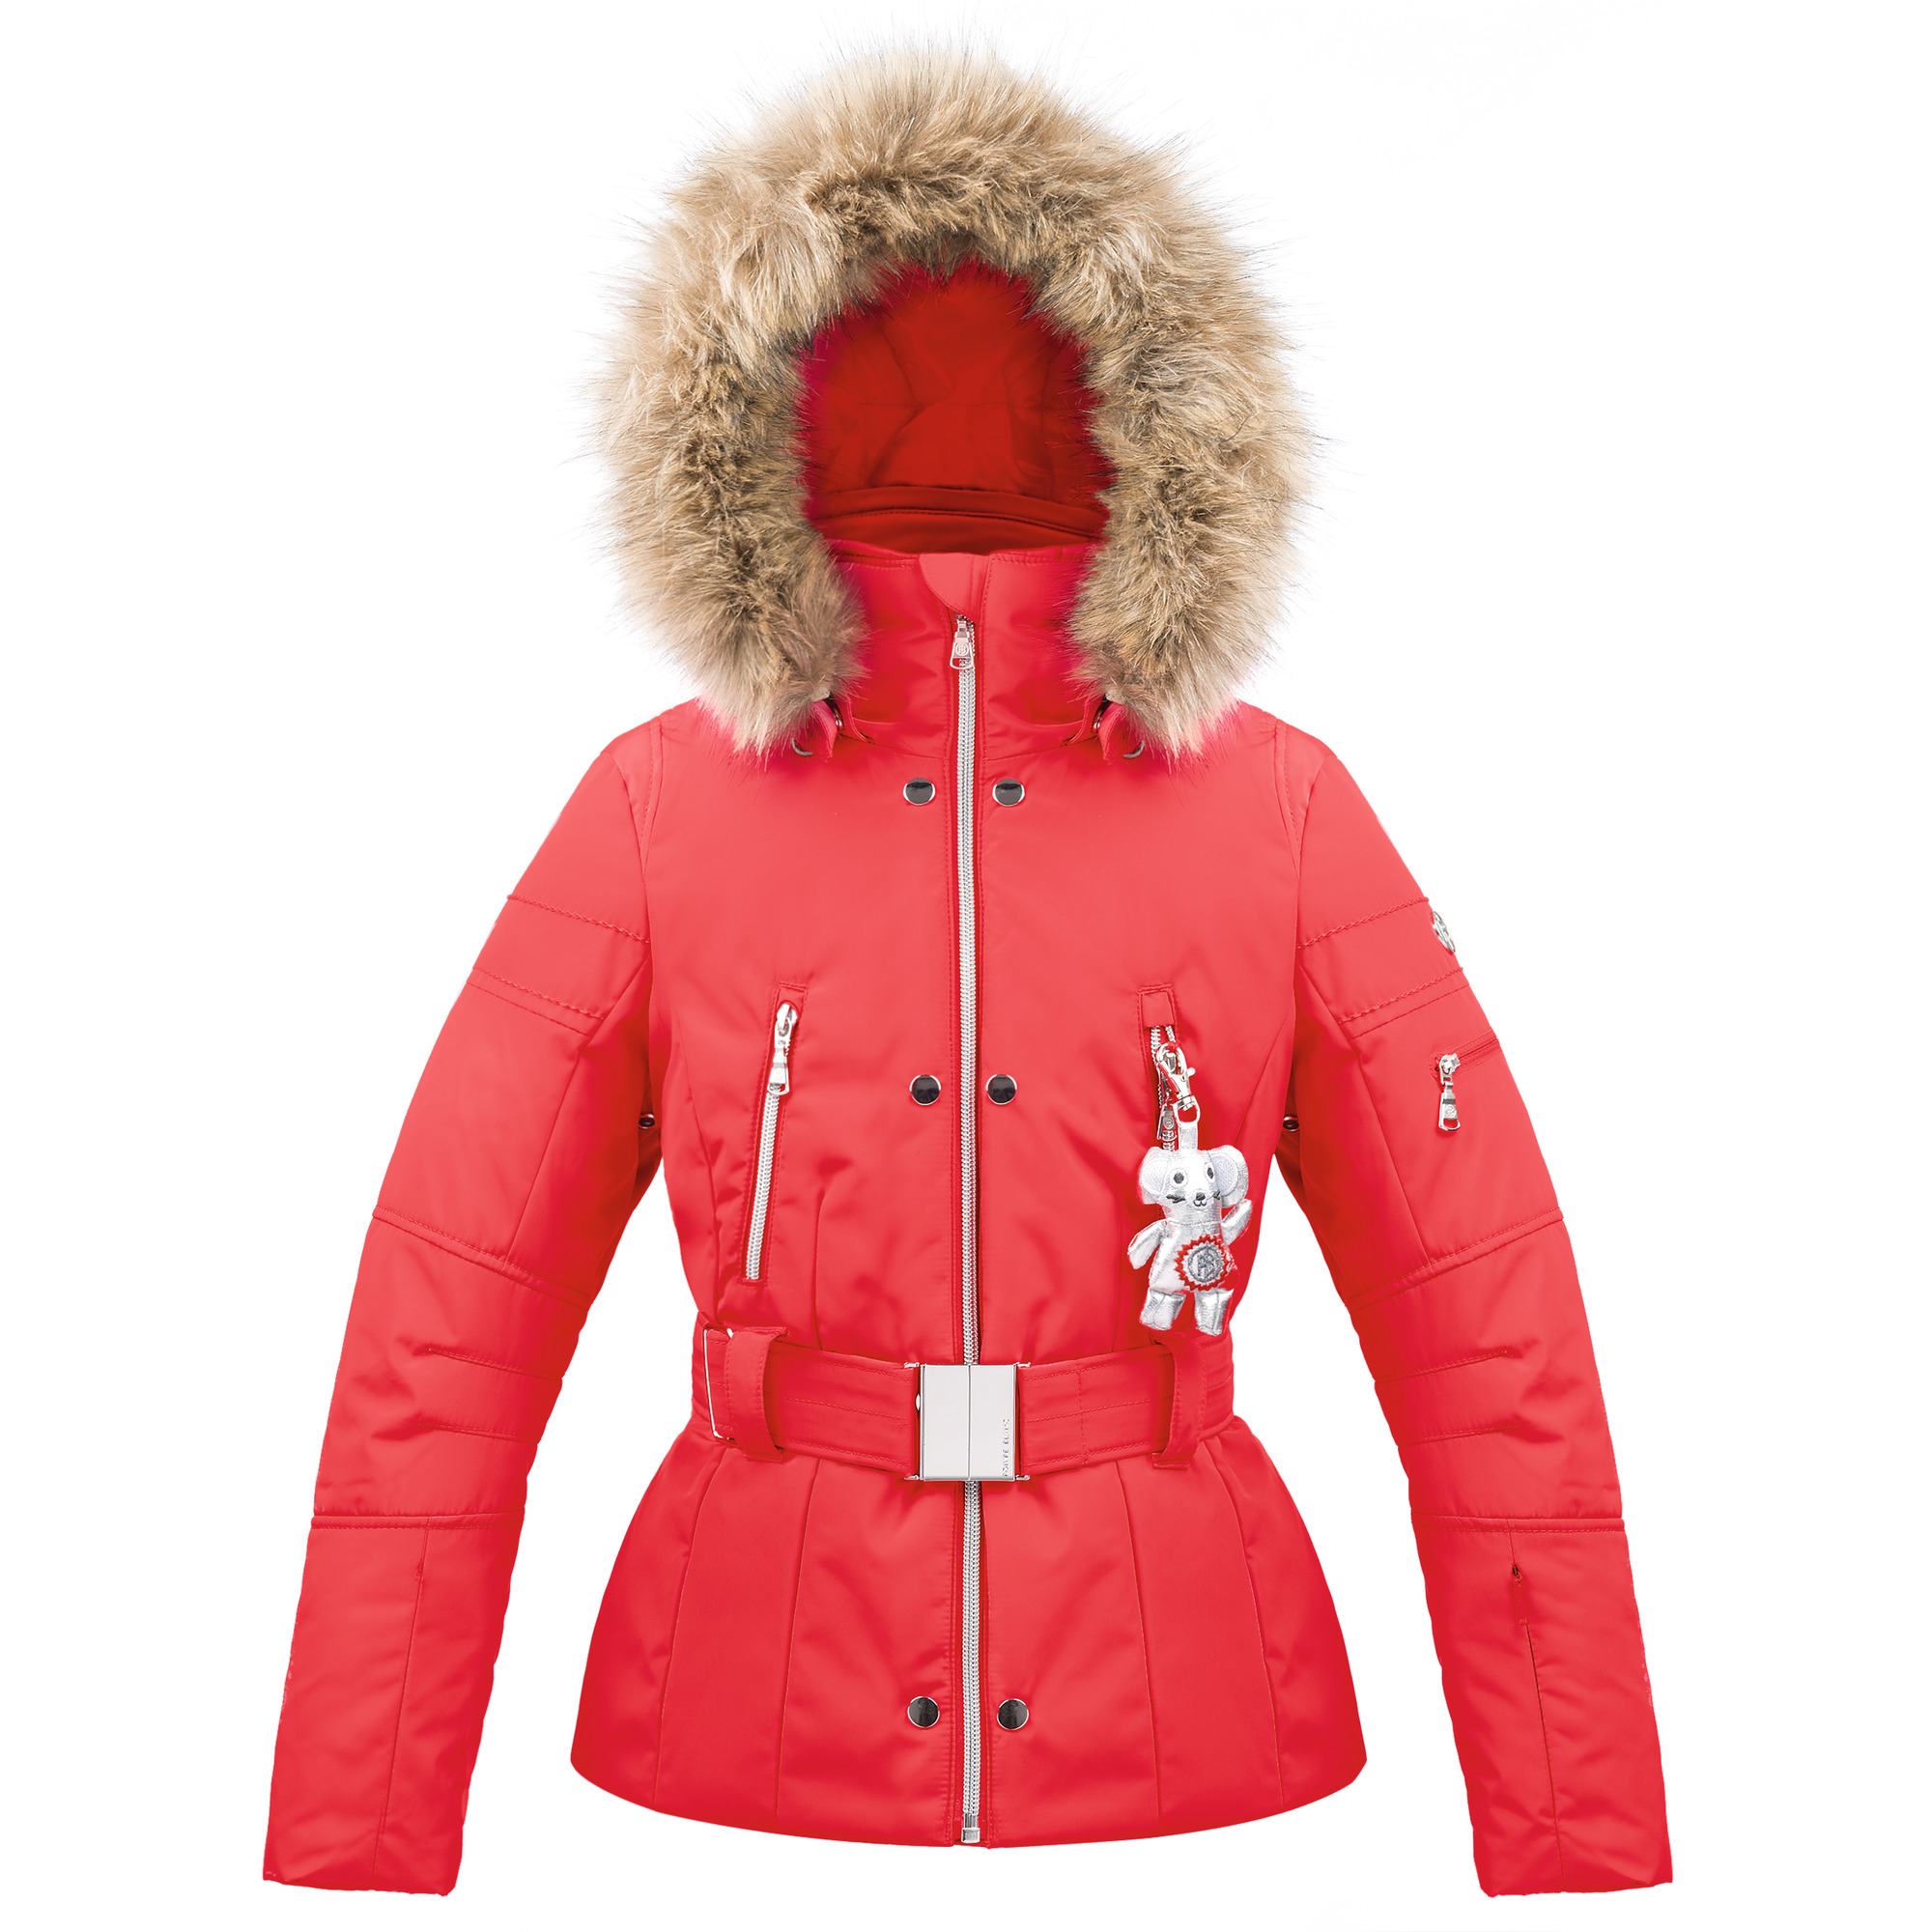 Geci Ski & Snow -  poivre blanc JR Girl Ski Jacket